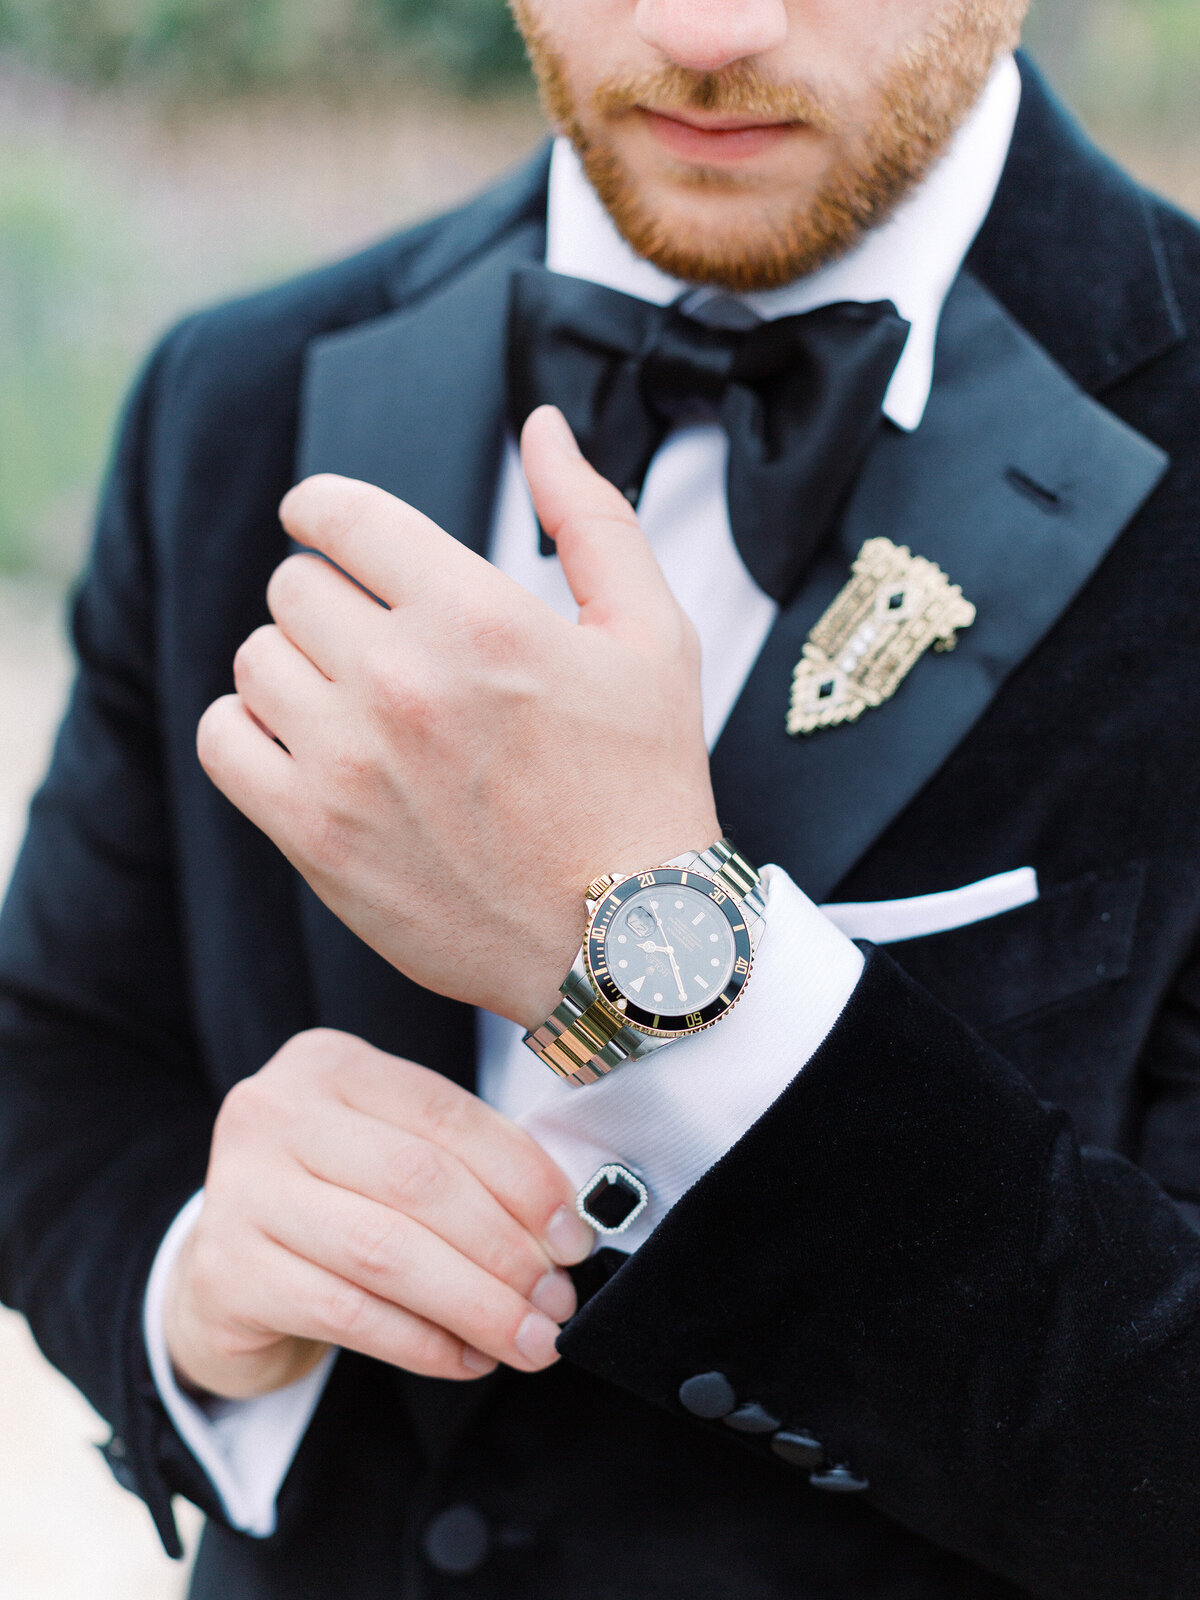 style-wedding-event-groom-martha-stewart-weddings-rolex-sal-ukra-personal-shopping-fashion-stylist-raina-silberstein